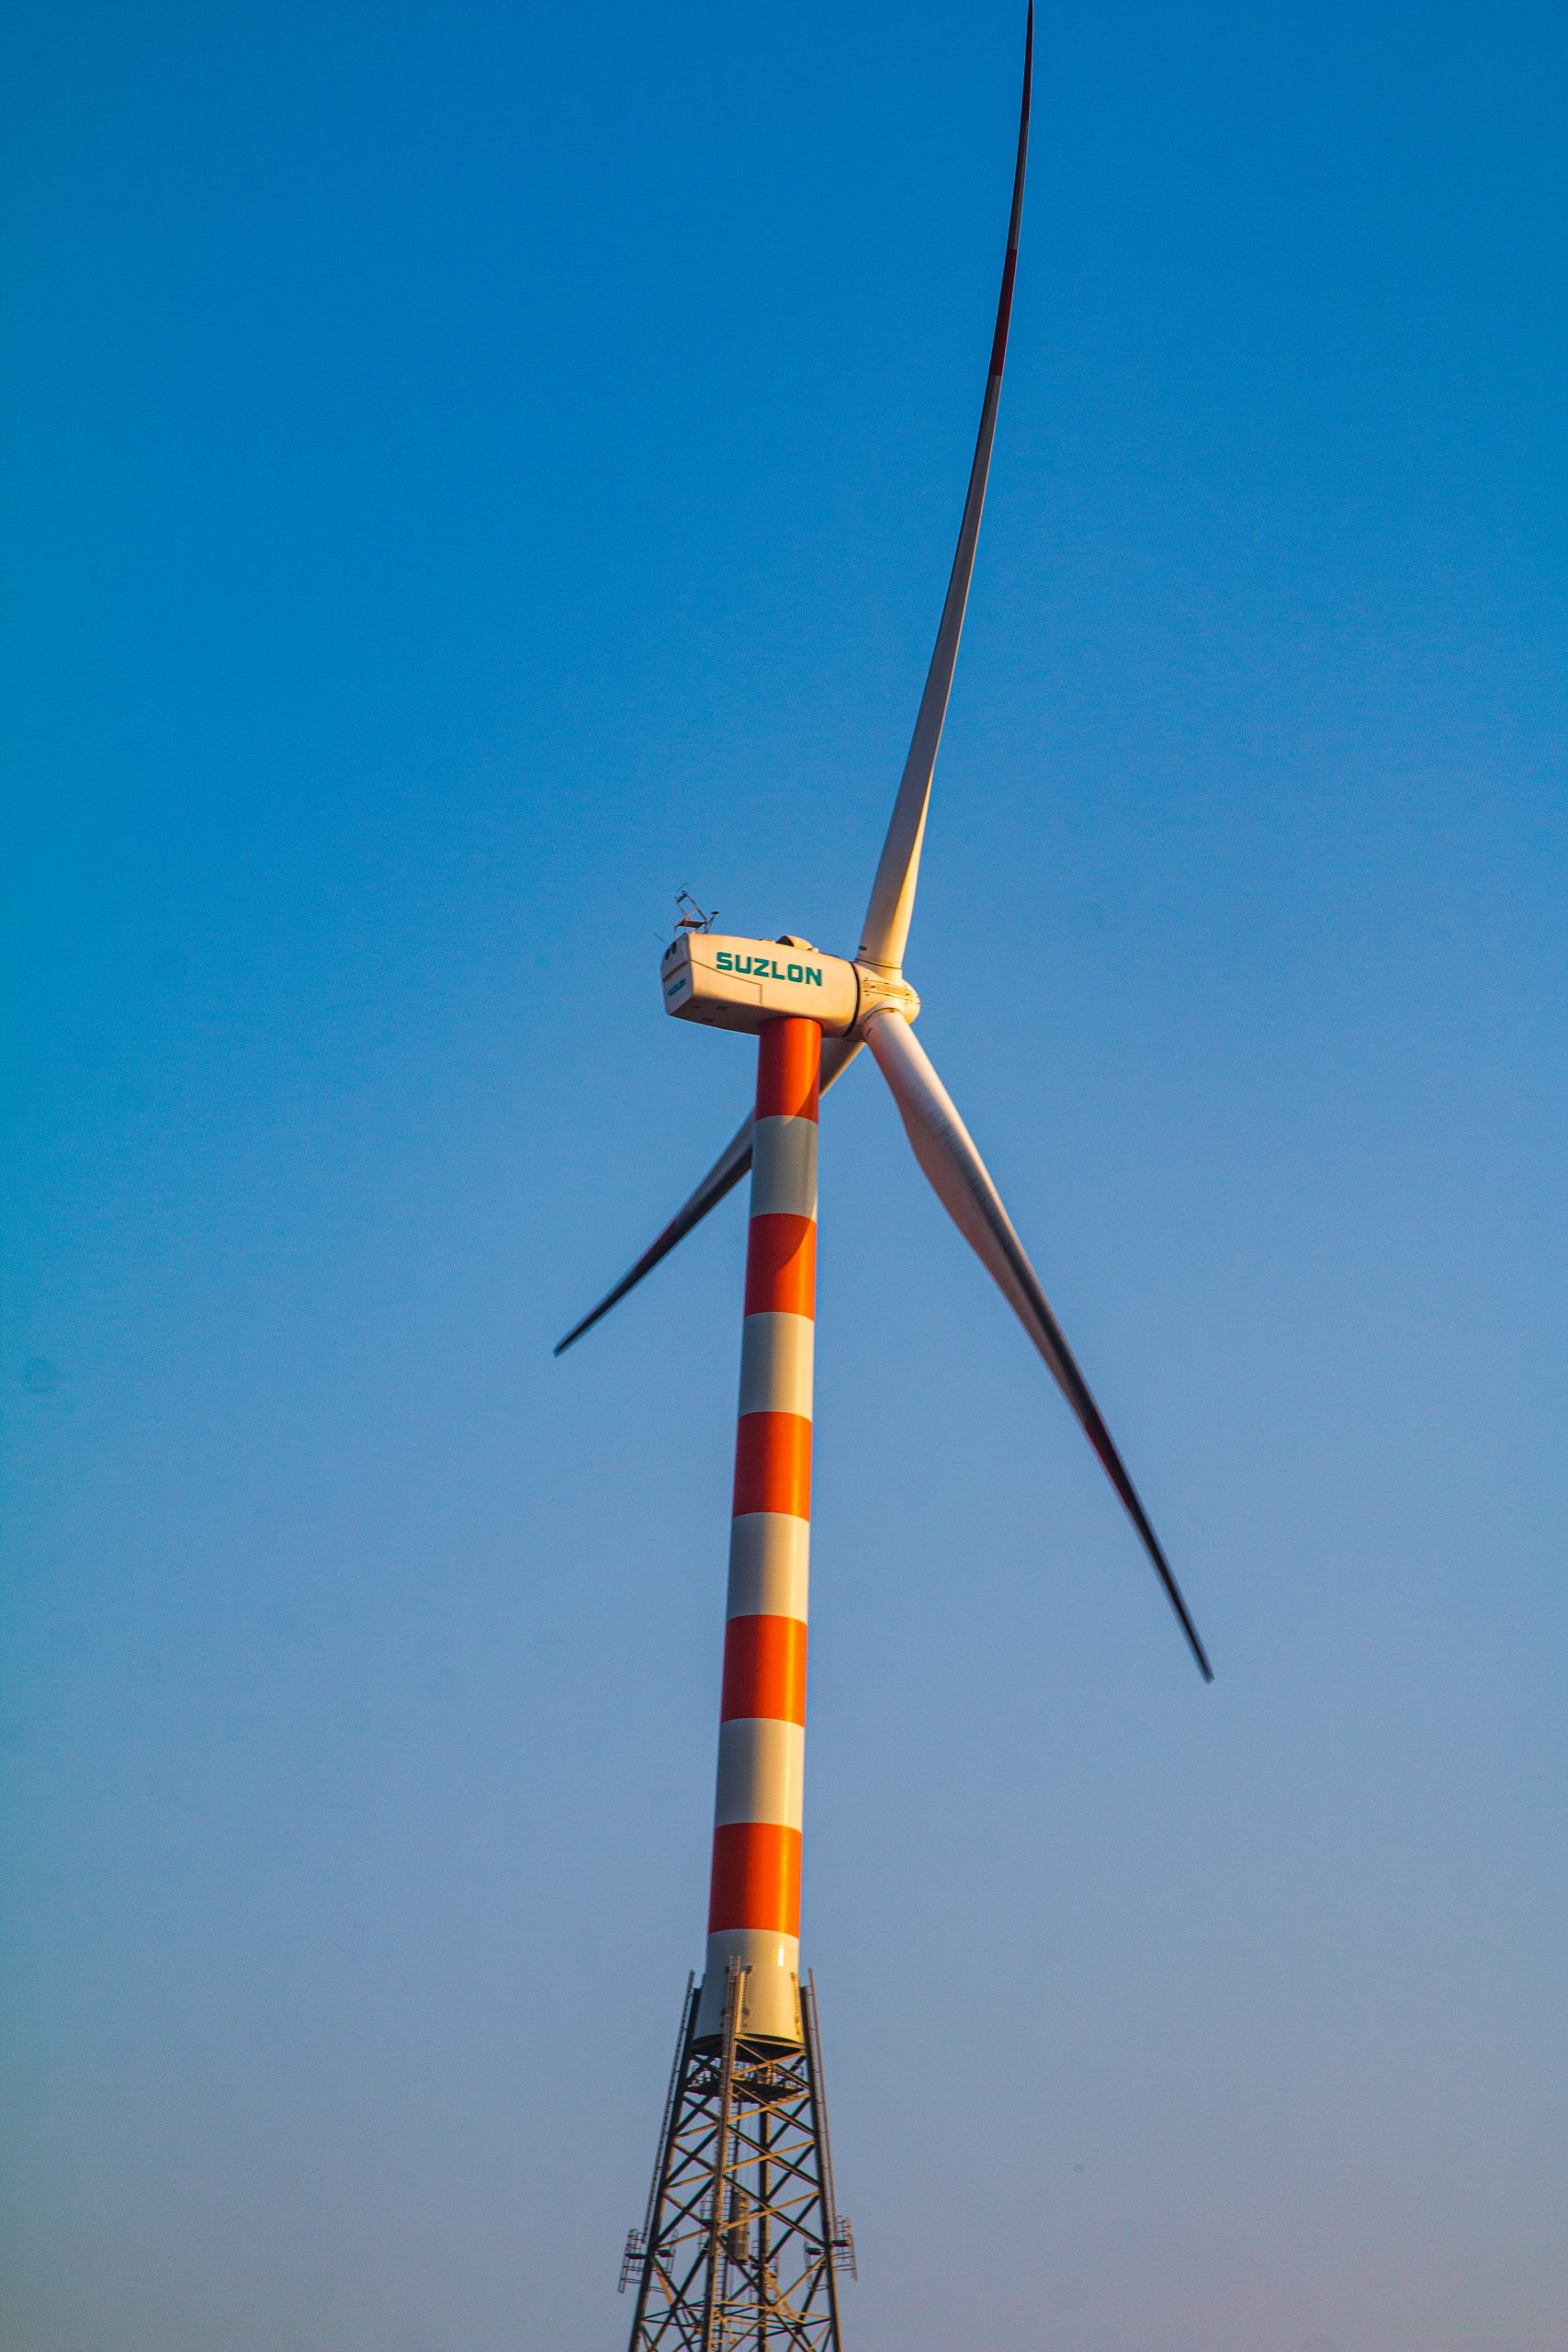 A windmill in an open area